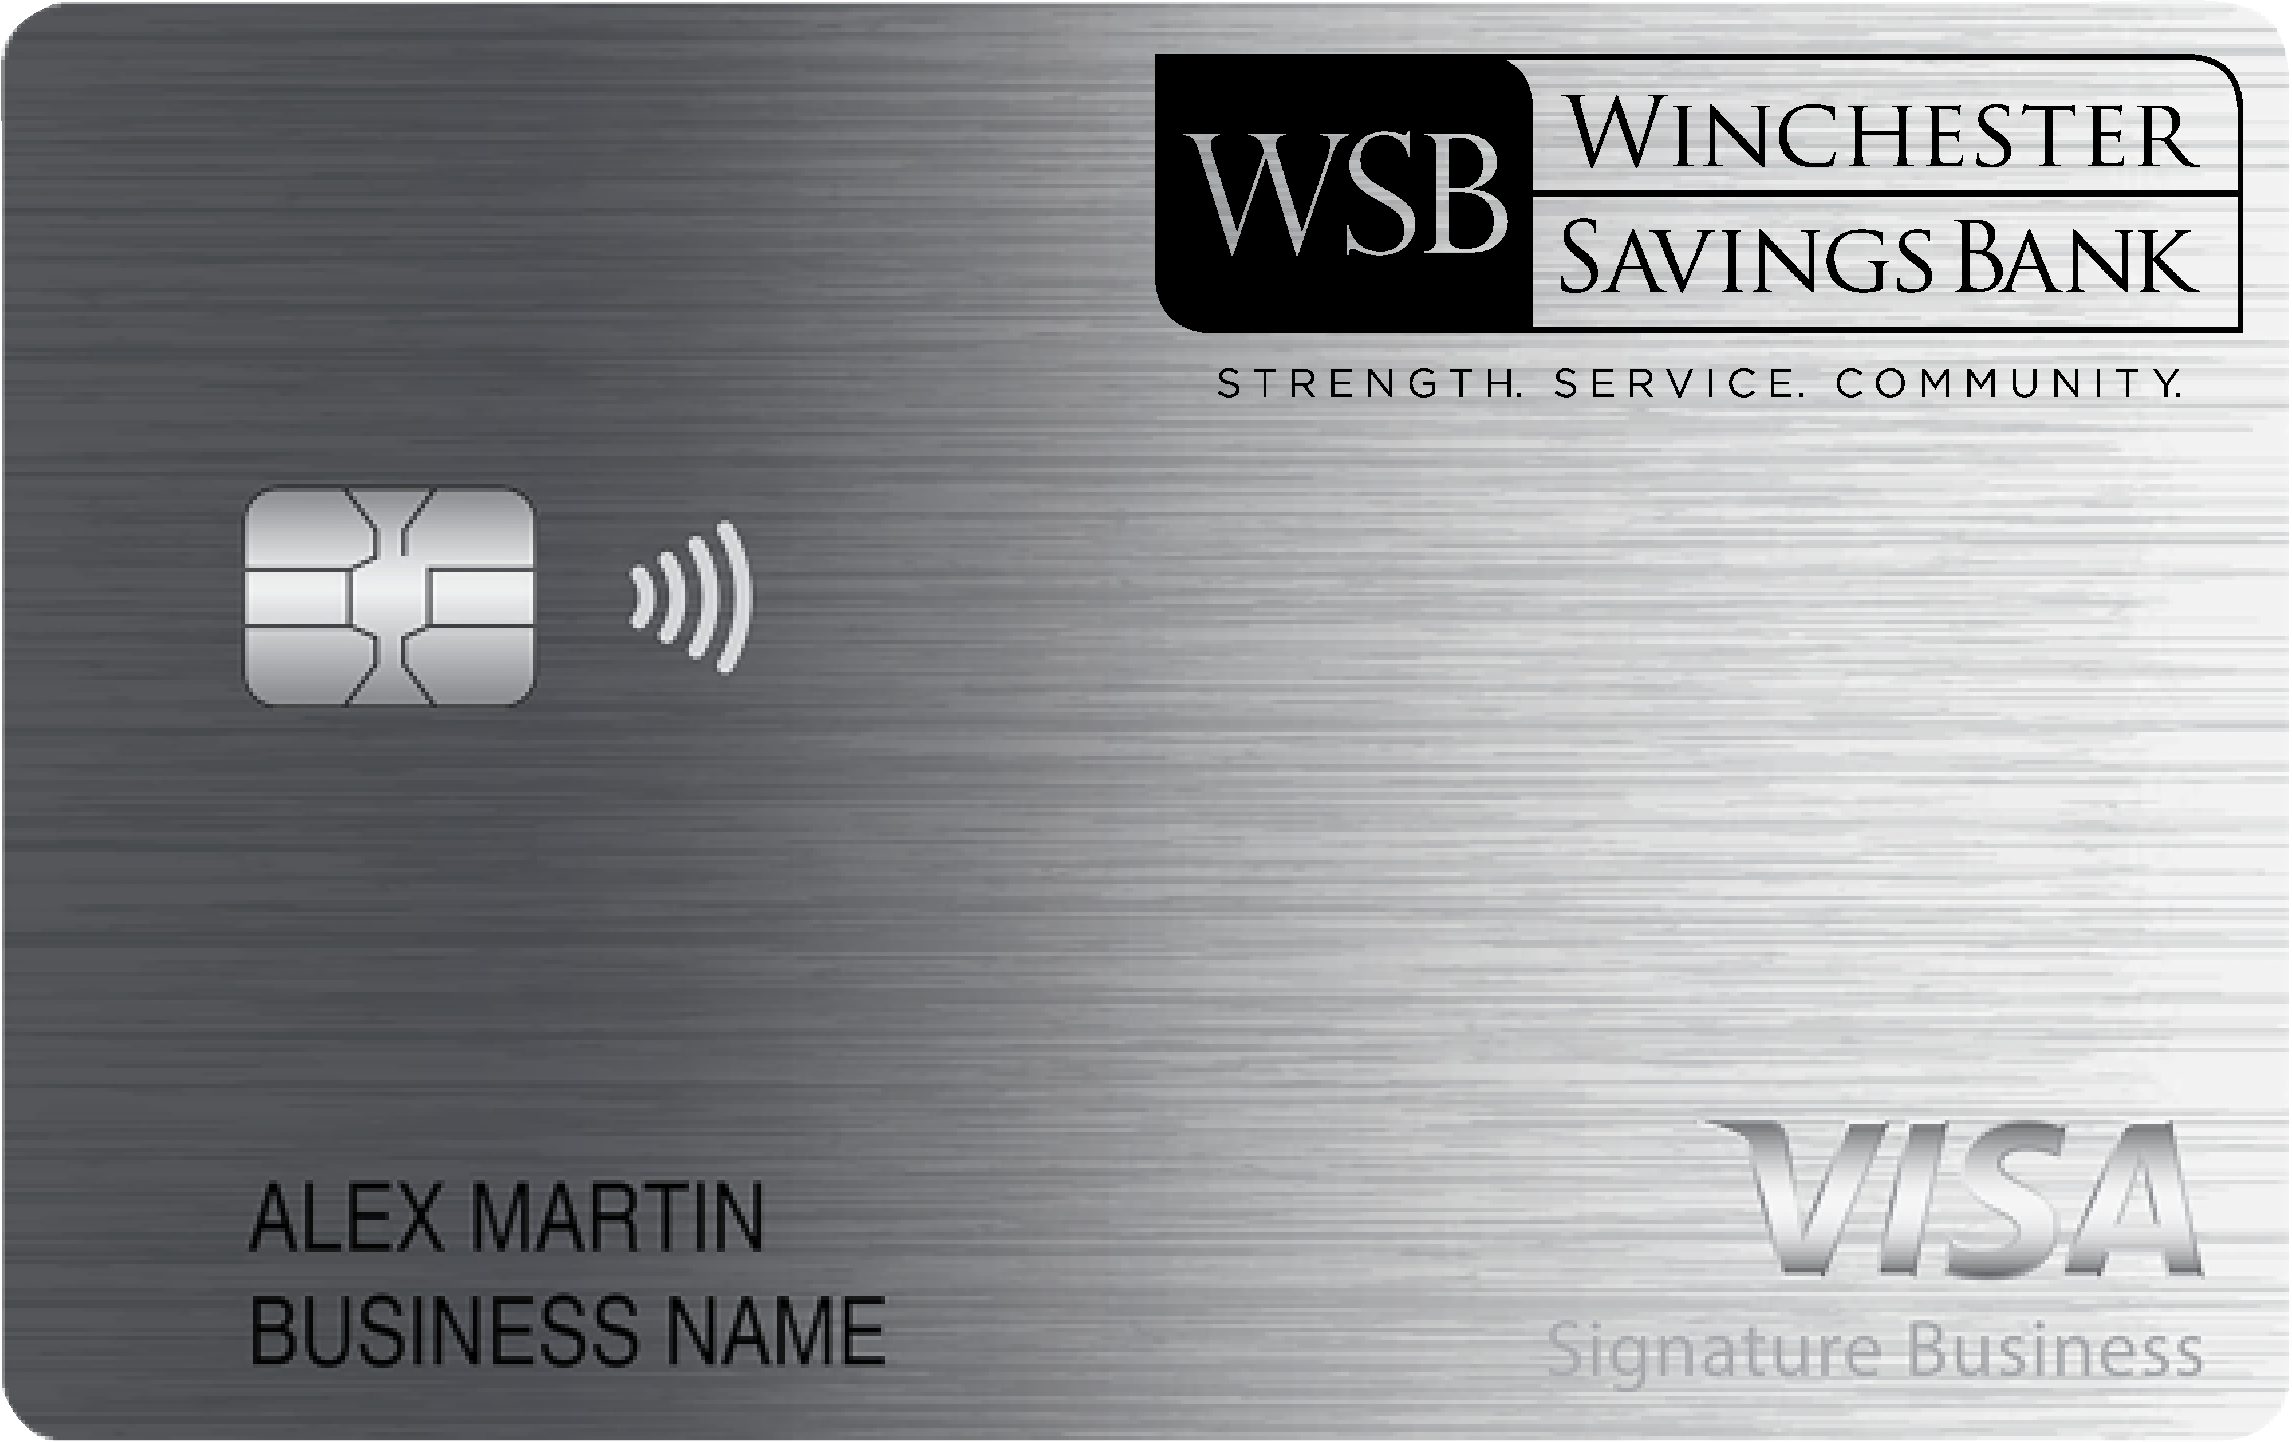 Winchester Savings Bank Smart Business Rewards Card